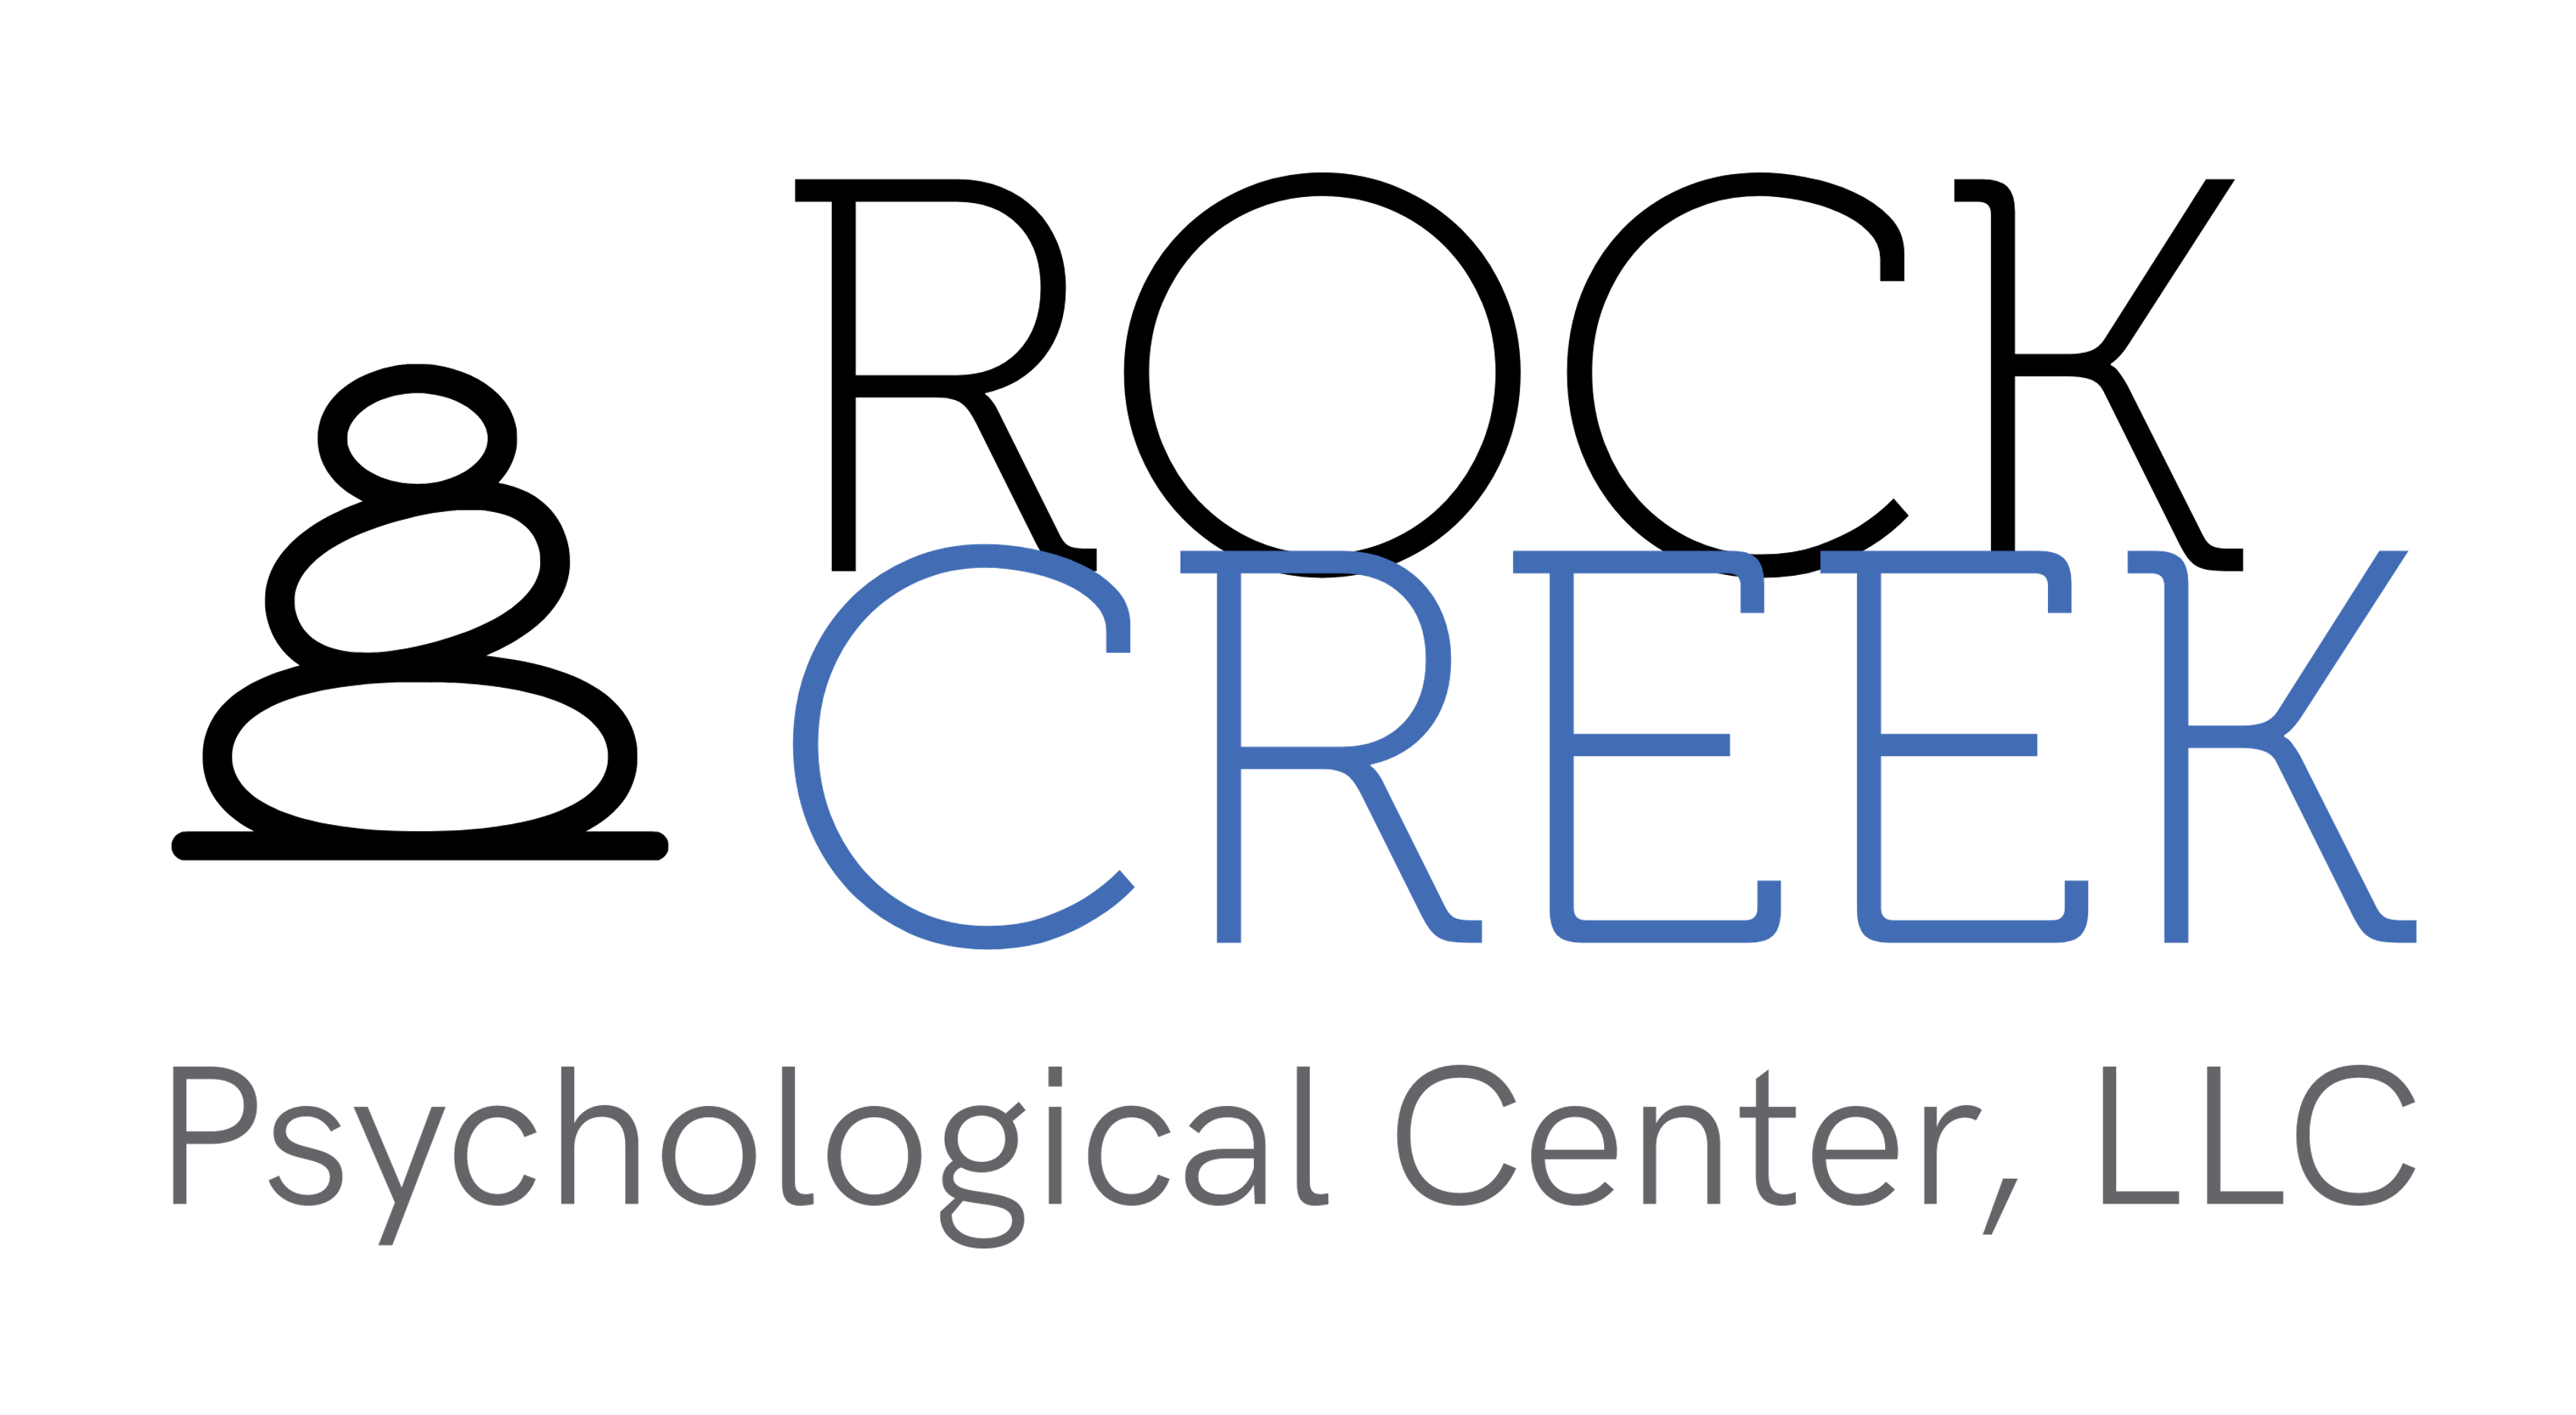 Rock Creek Psychological Center, LLC